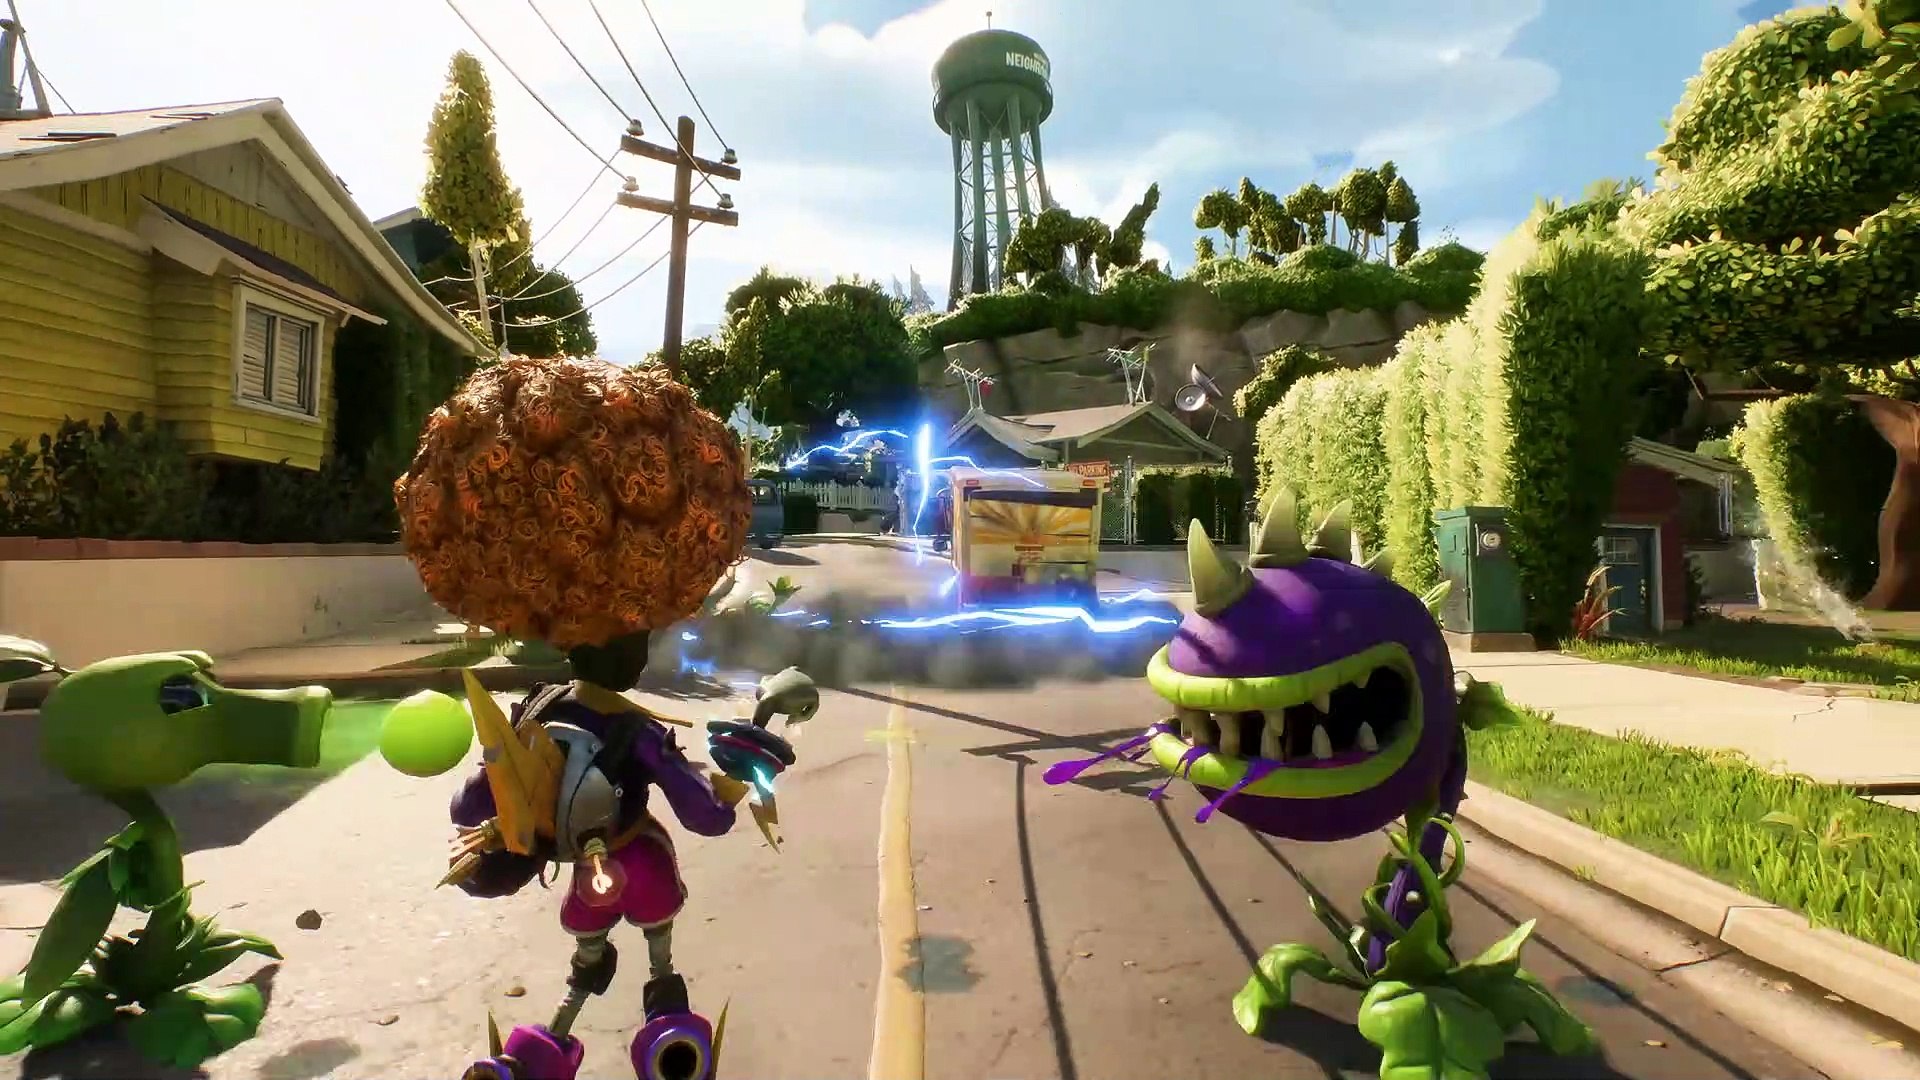  Plants Vs Zombies: Battle For Neighborville (PS4) : Video Games